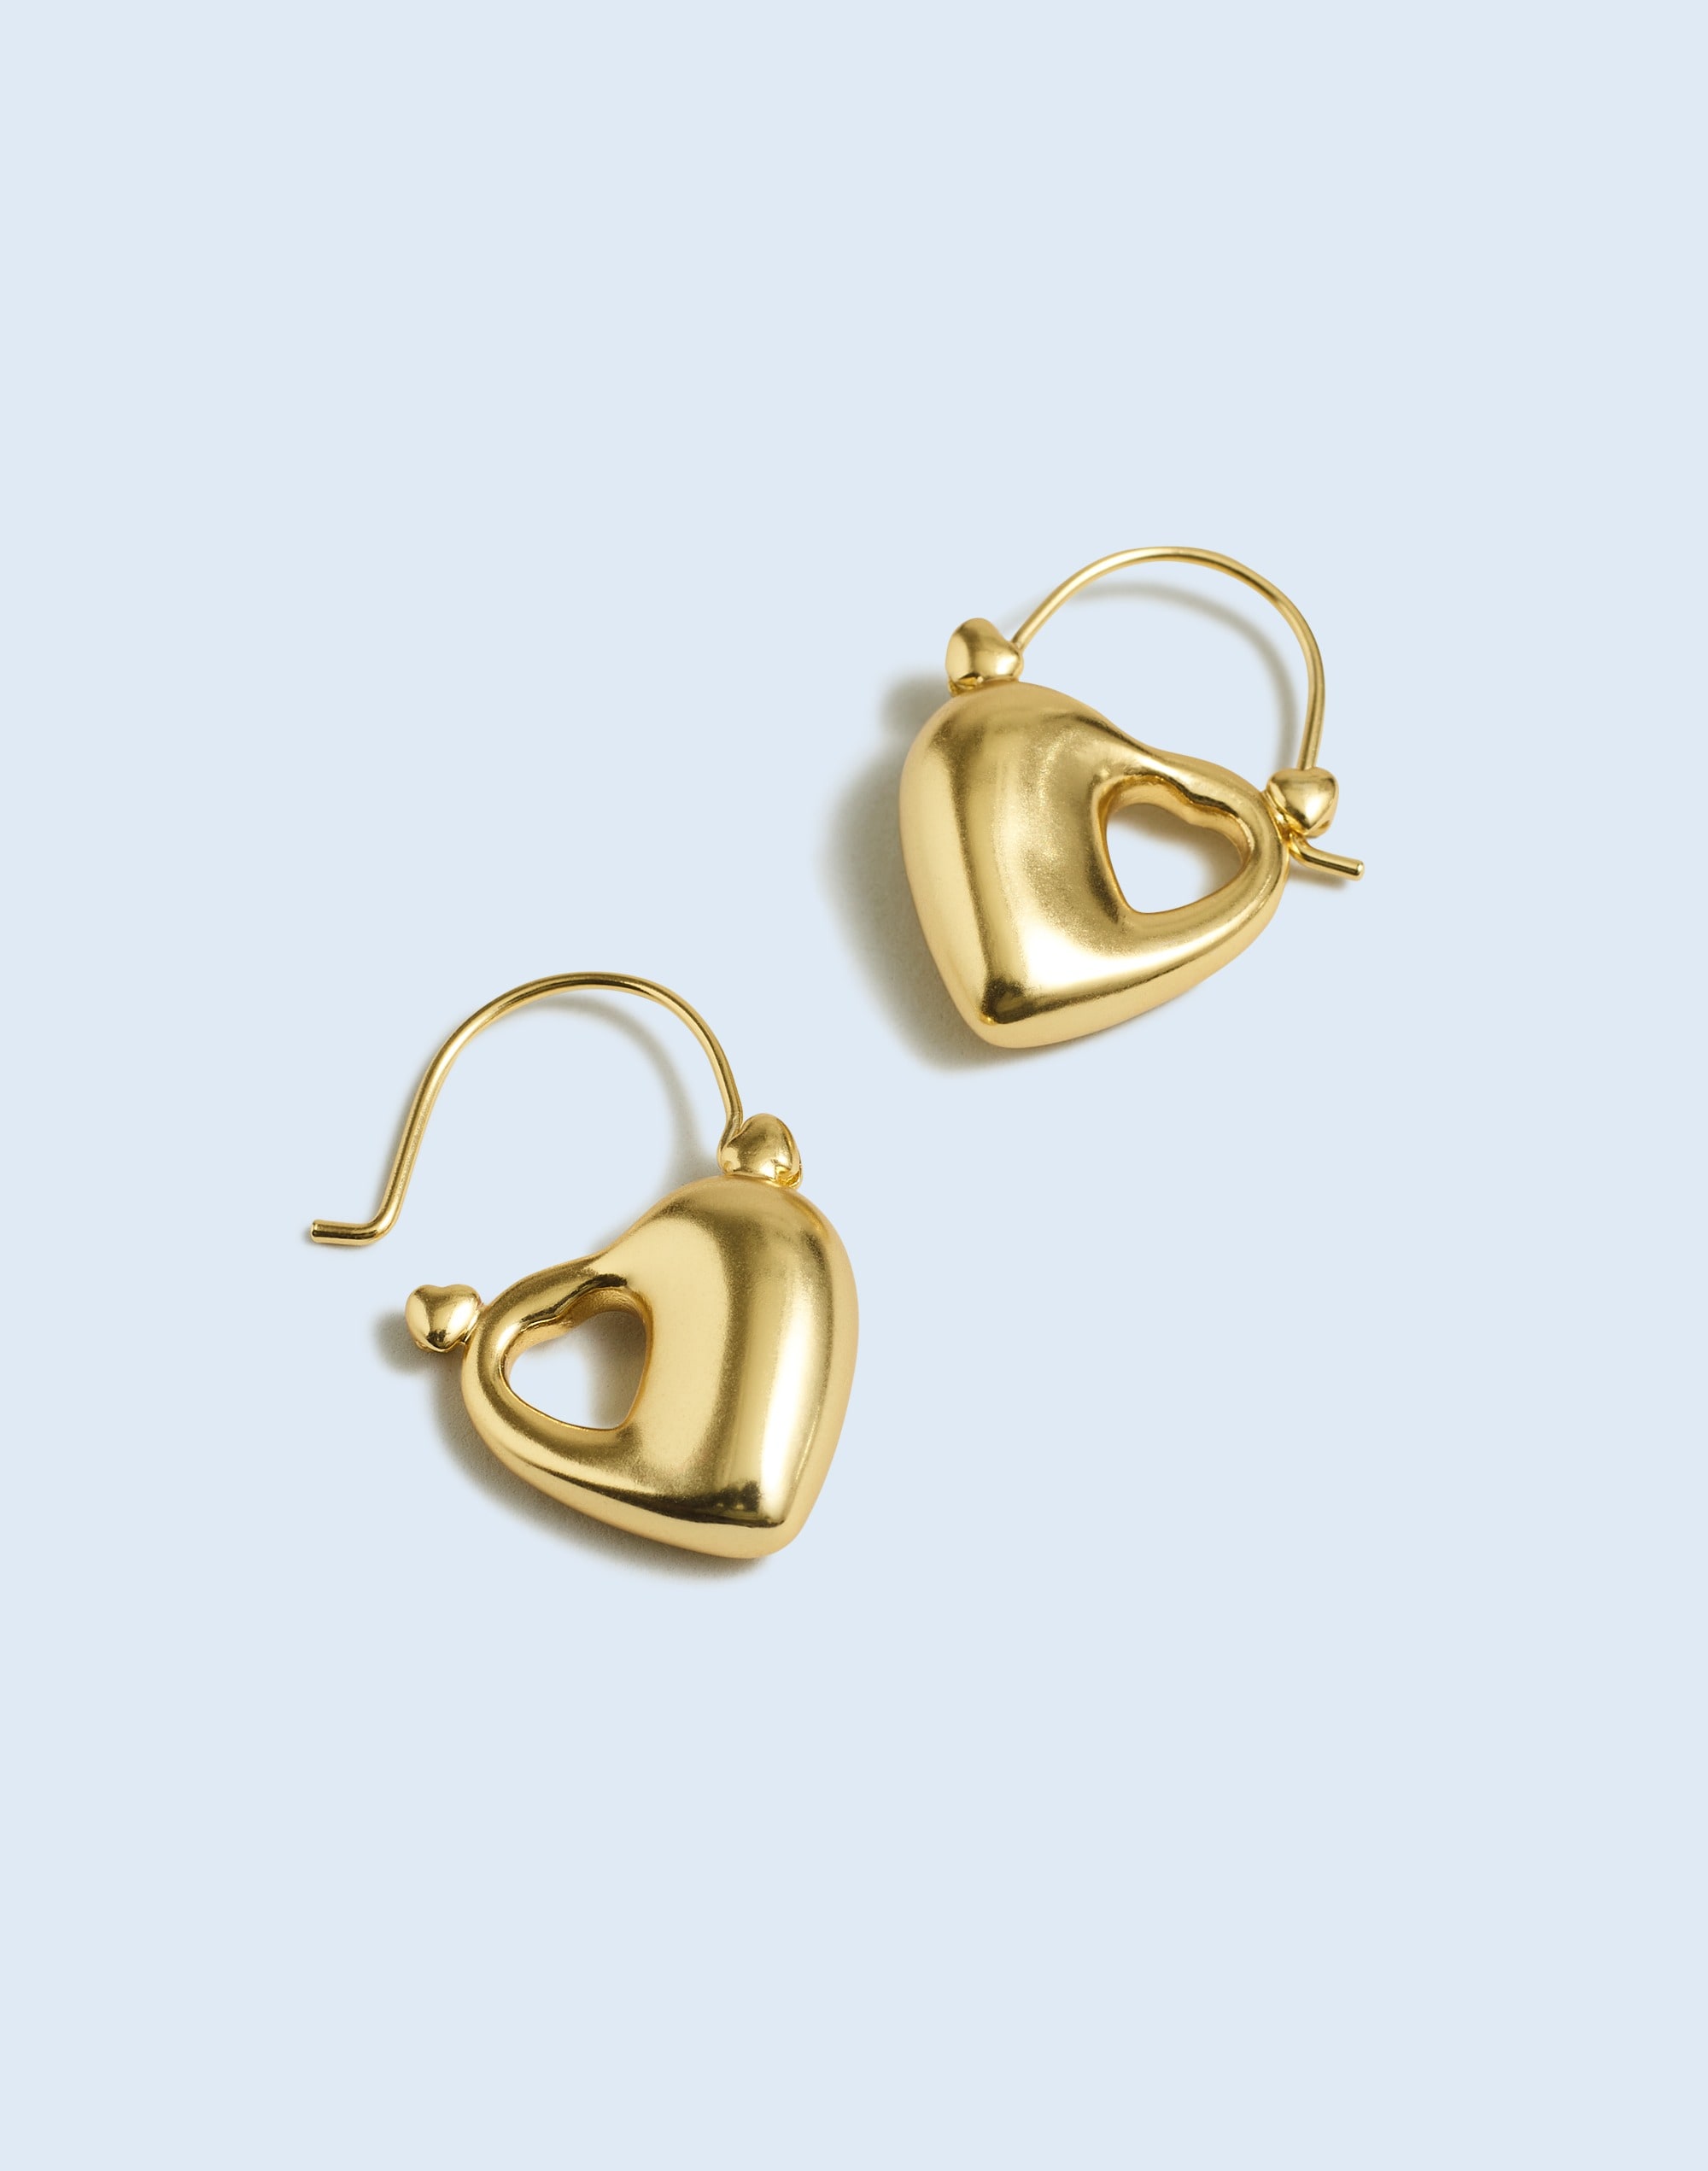 Mw Cutout Puffy Heart Huggie Hoop Earrings In Vintage Gold